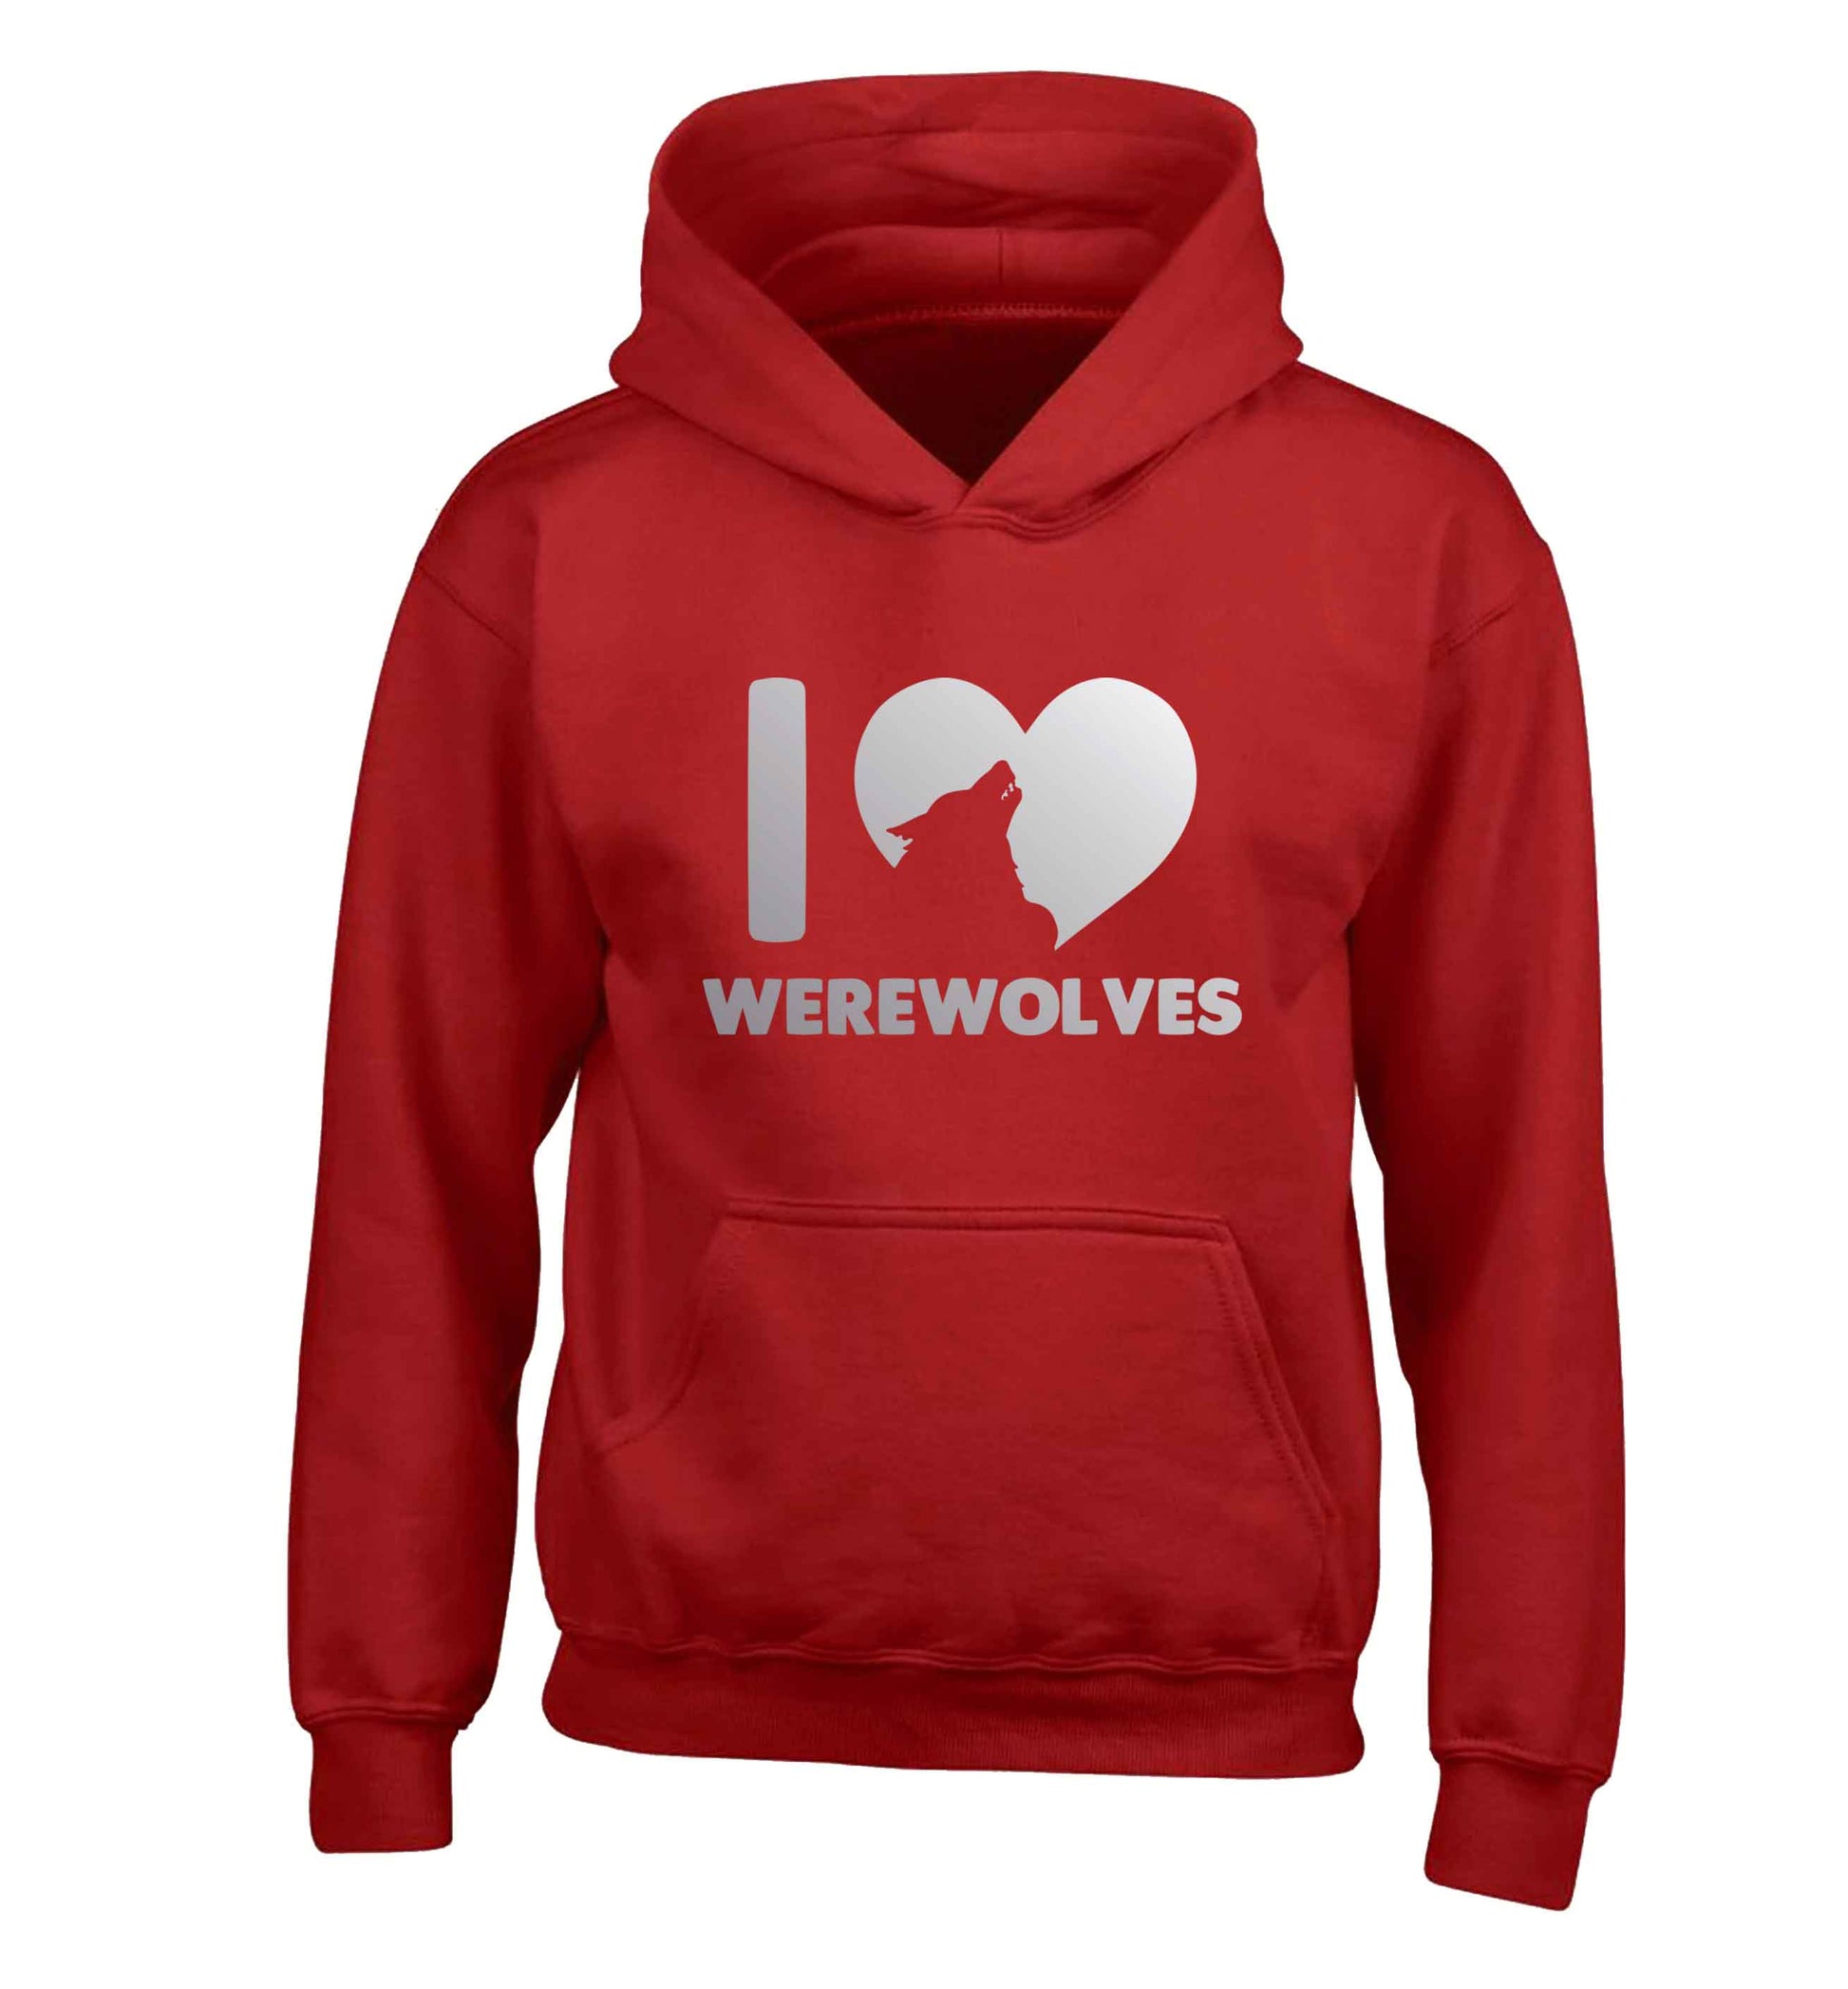 I love werewolves children's red hoodie 12-13 Years